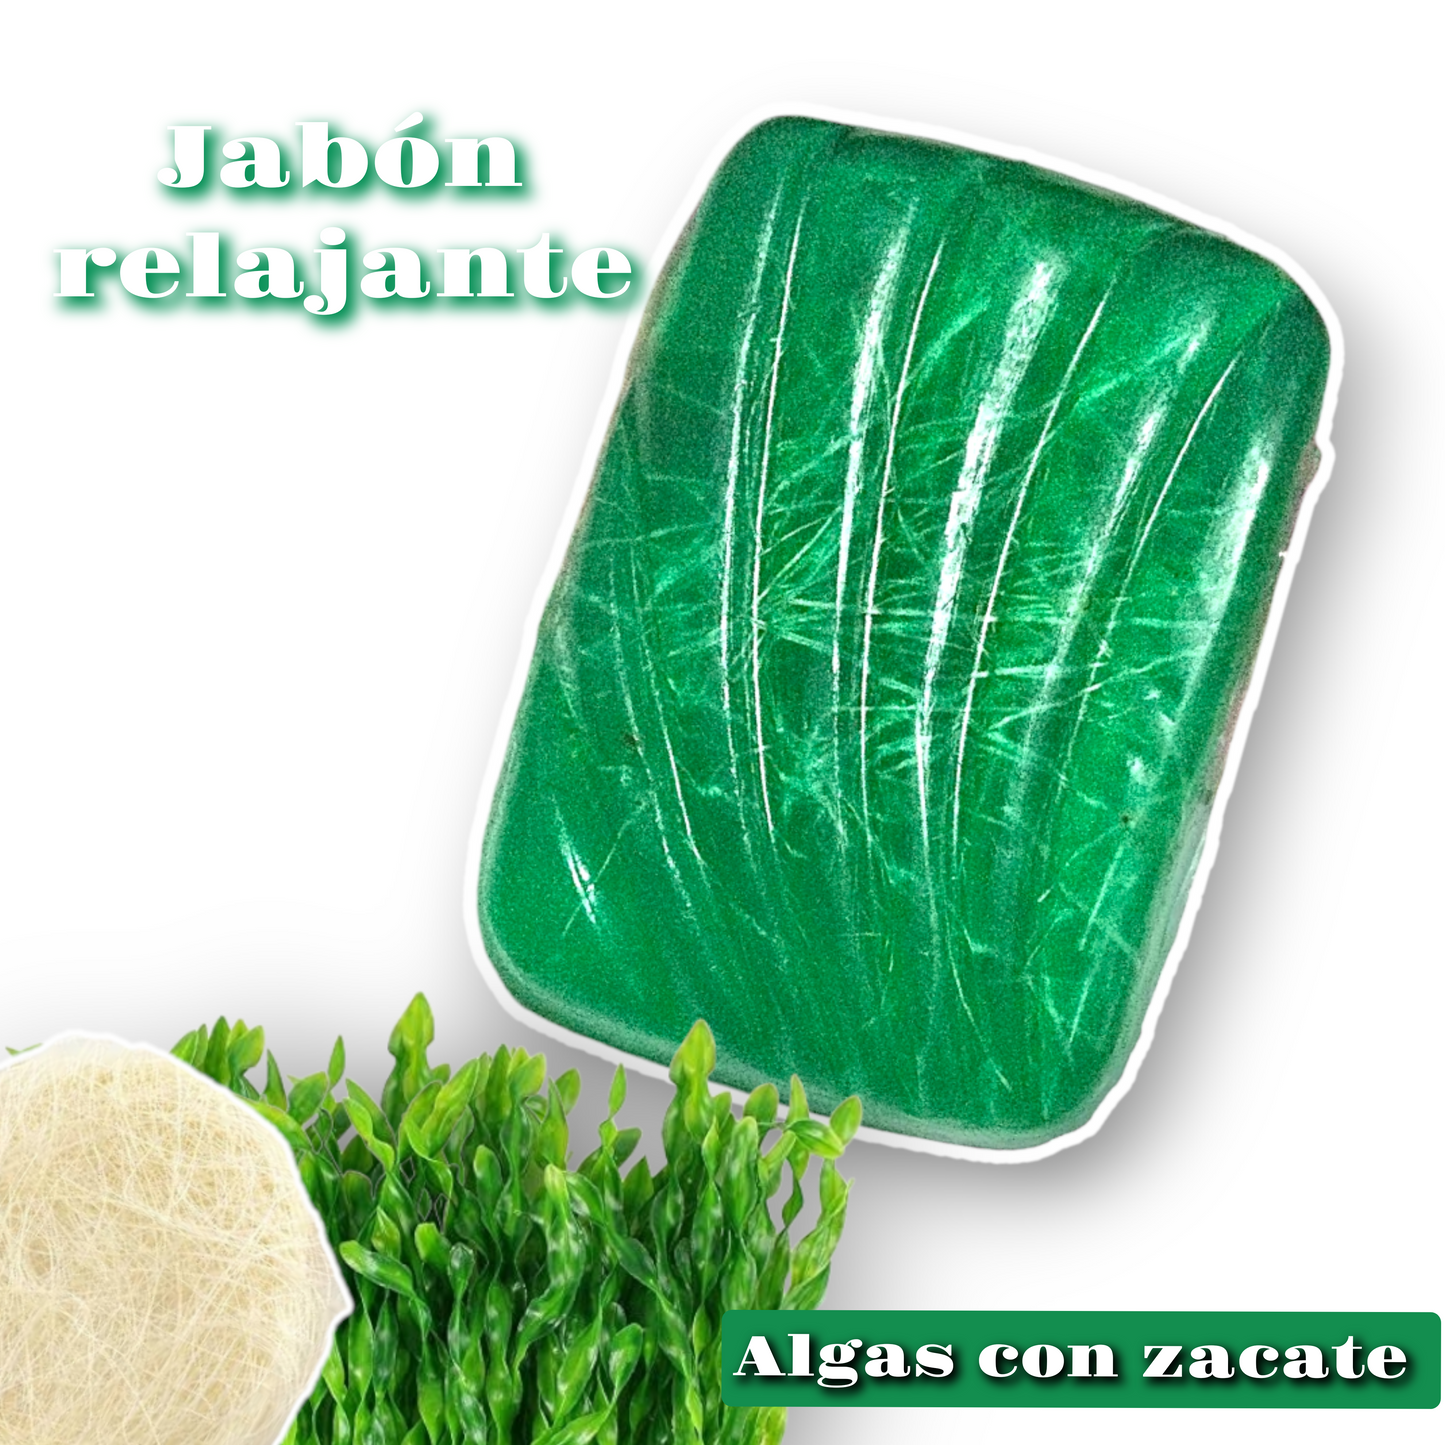 Jabón Orgánico relajante de algas con zacate